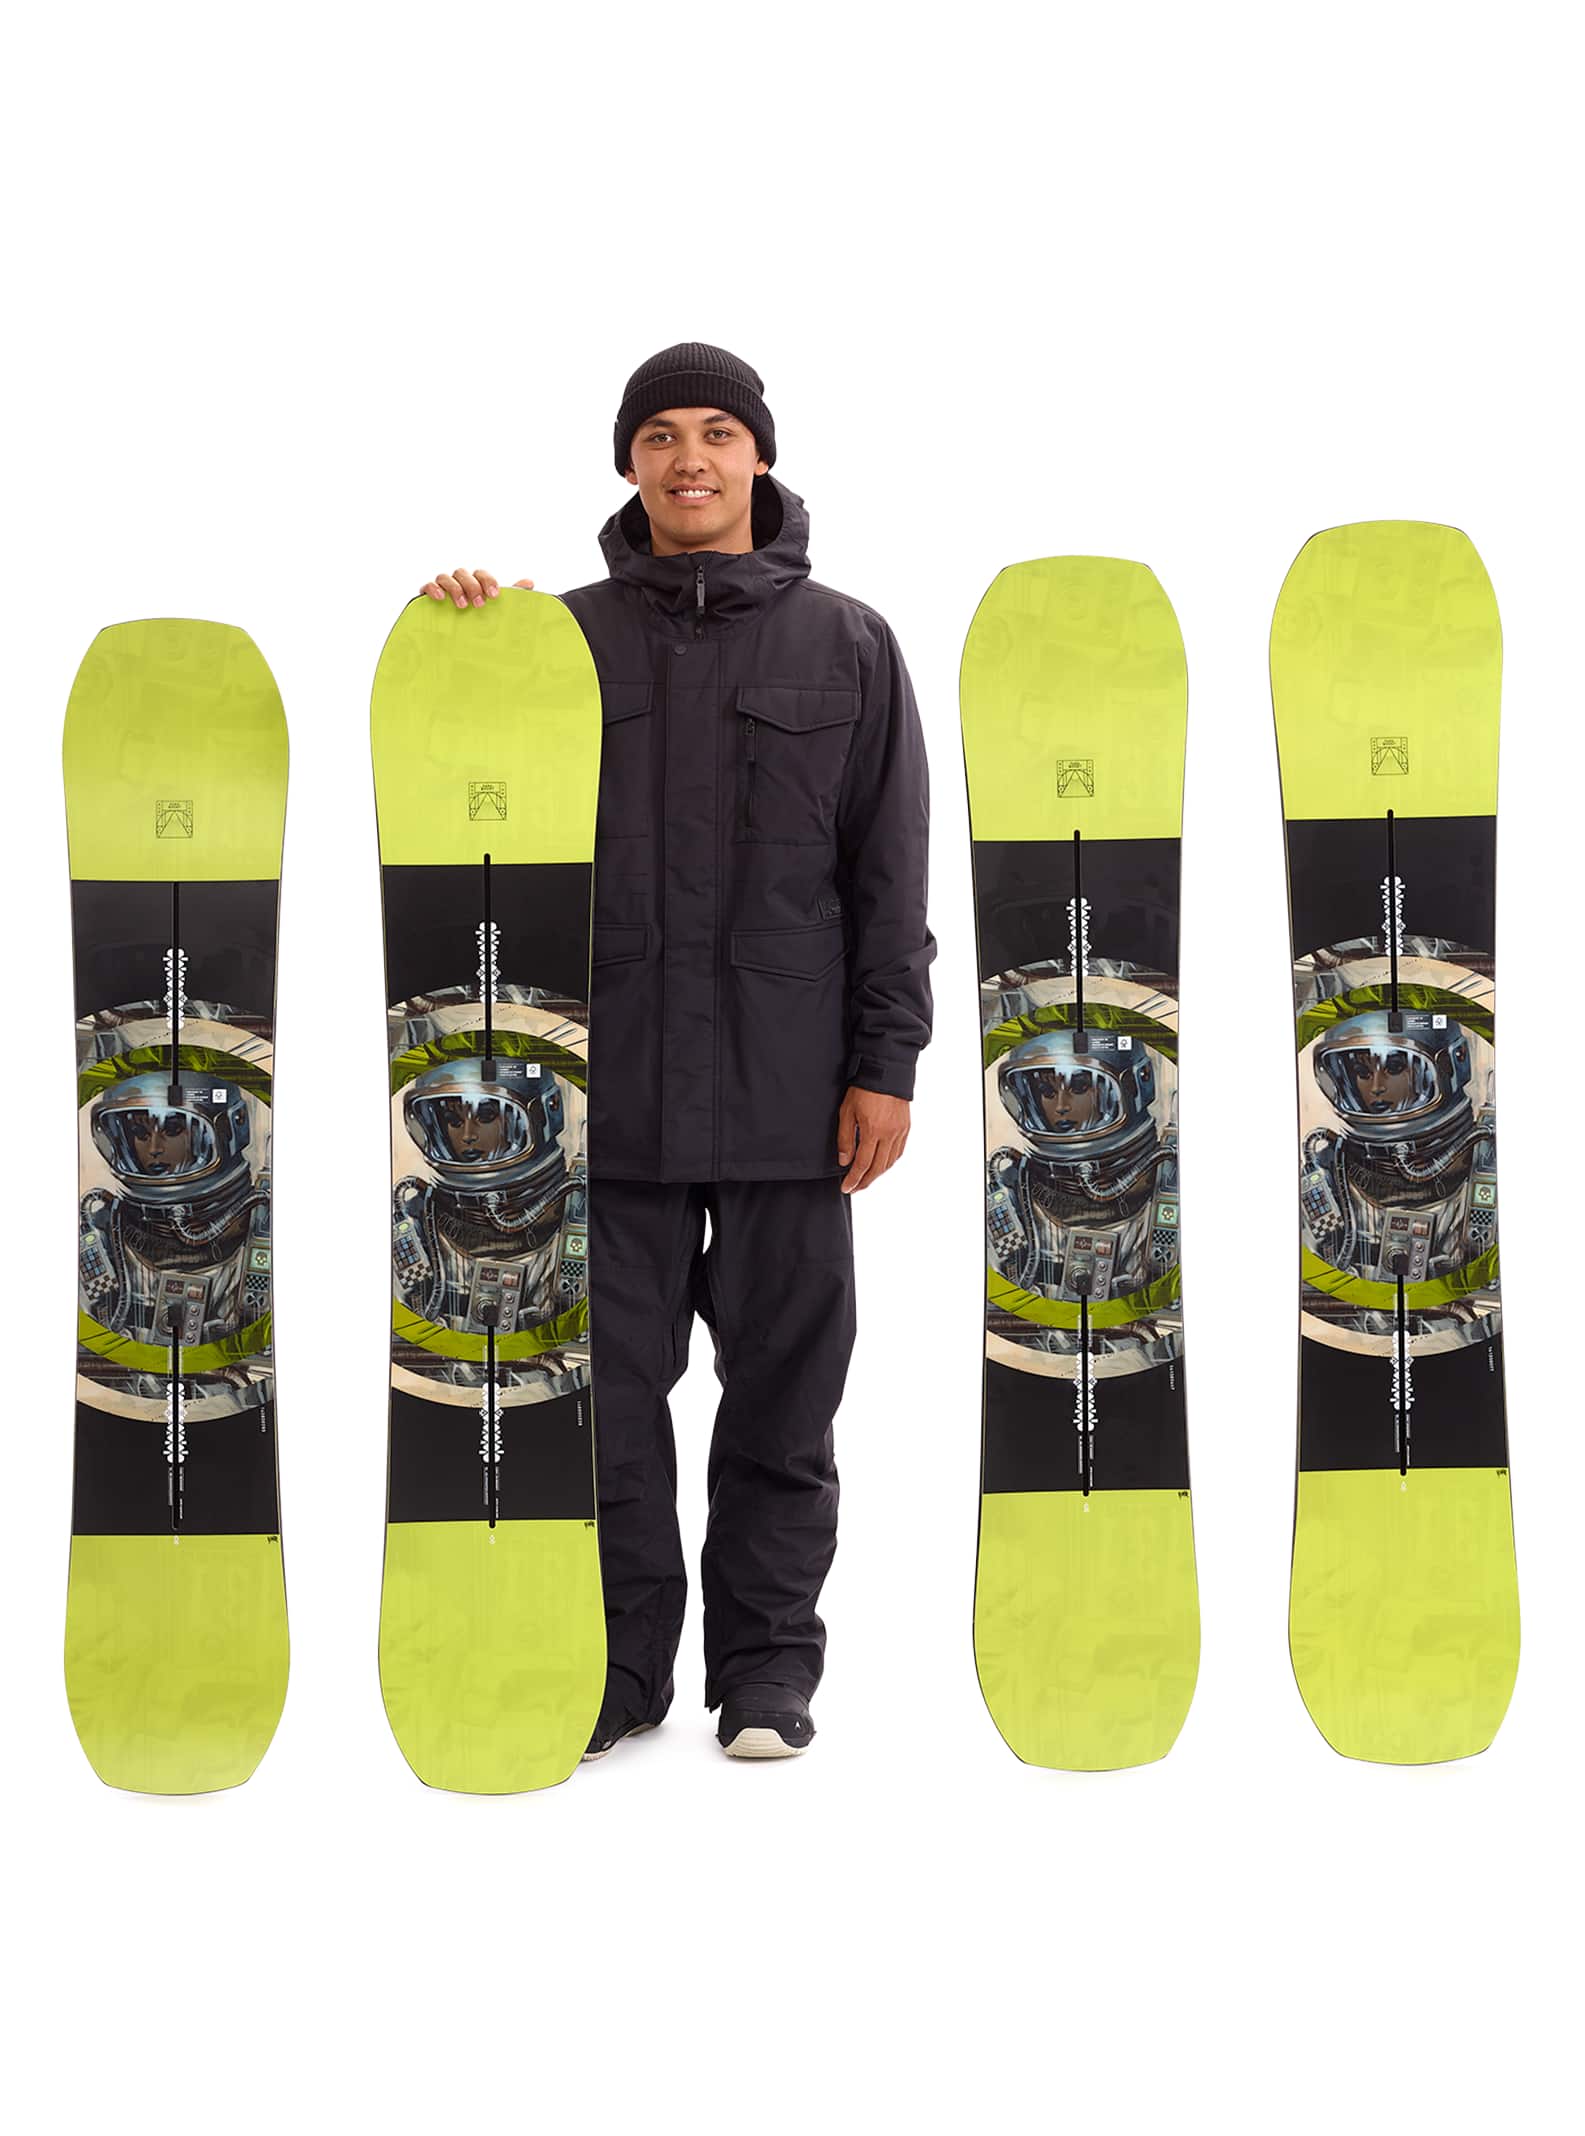 overal binair Krachtig Men's Burton Paramount Snowboard | Burton.com Winter 2019 US